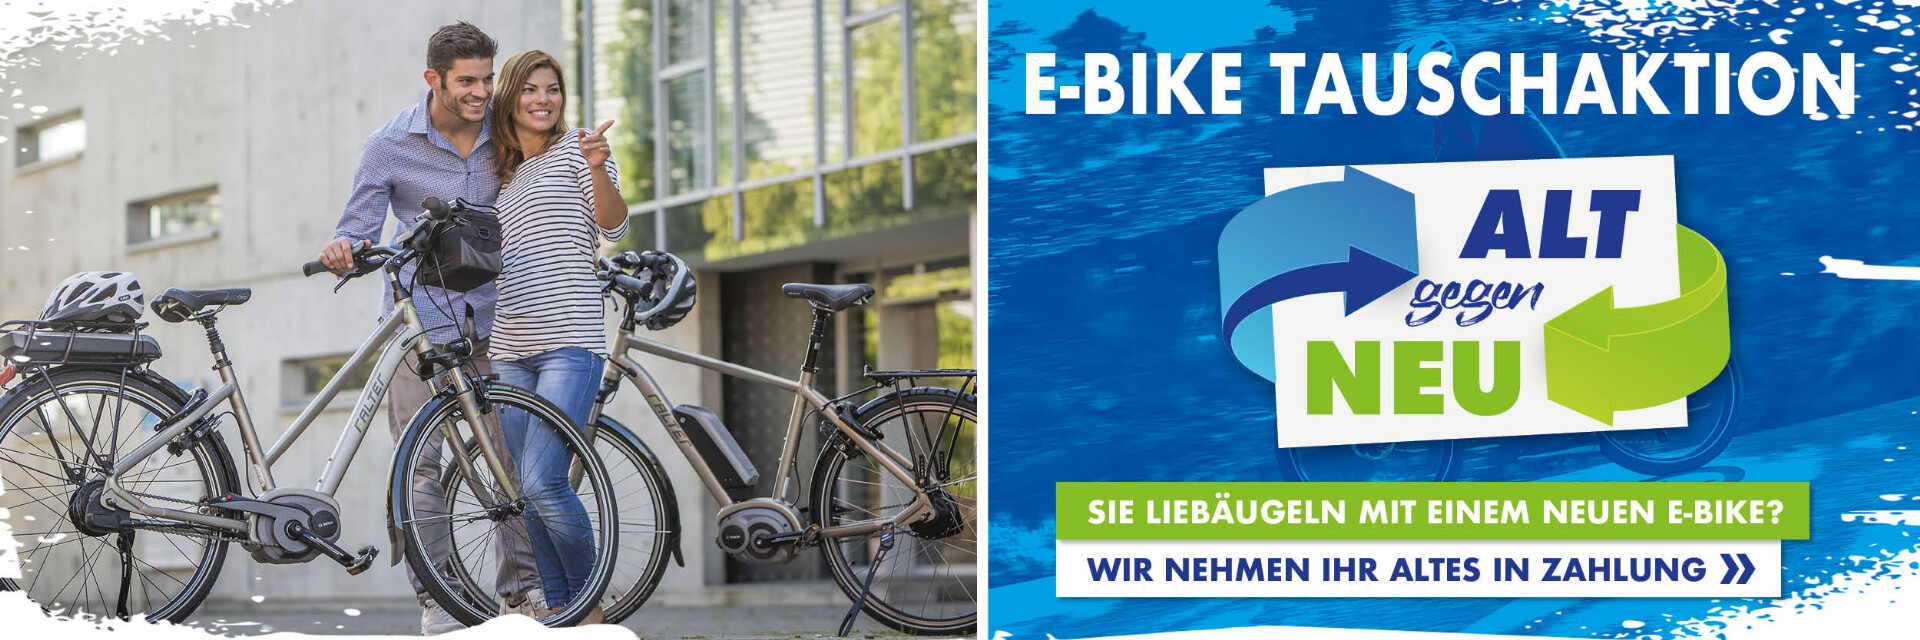 https://bikes.rim.de/POPUP-16002-shop7641-w1920-h640-f0-g0-q90.jpg